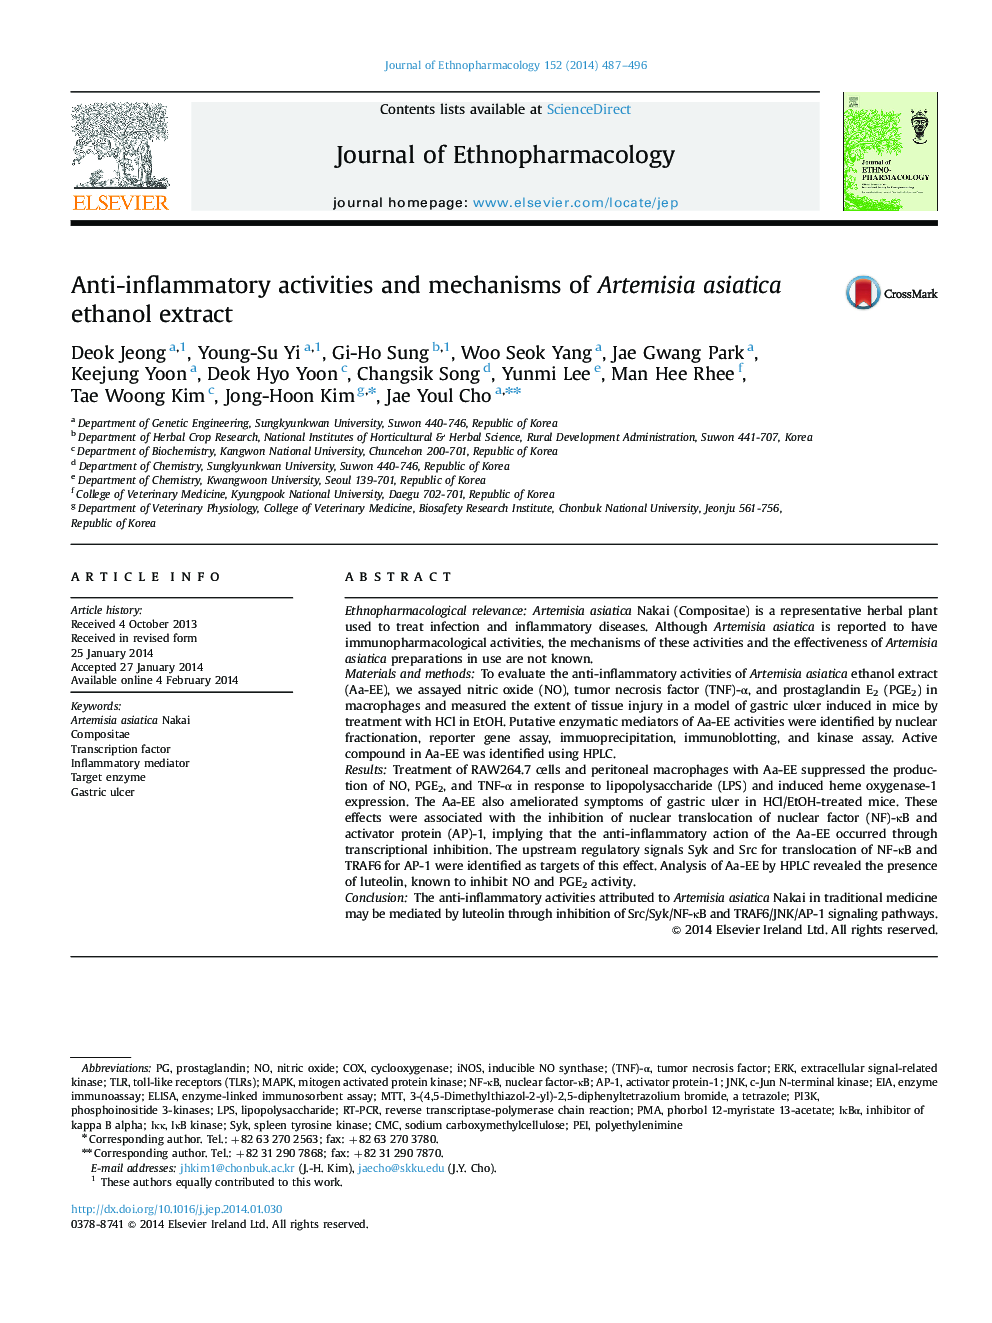 Anti-inflammatory activities and mechanisms of Artemisia asiatica ethanol extract